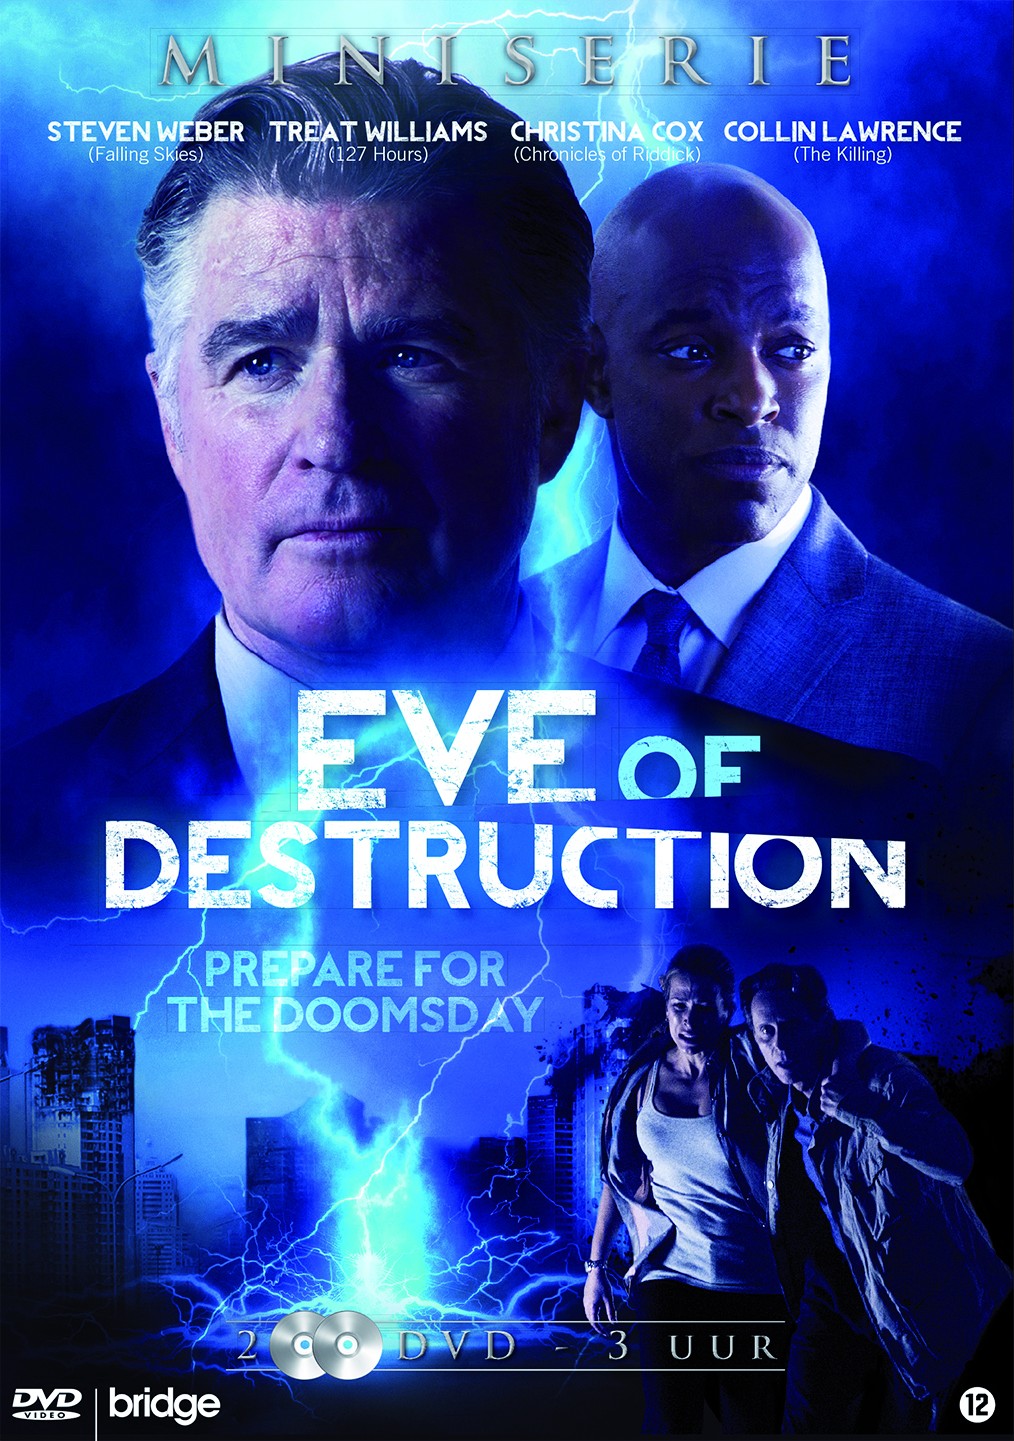 Eve of destruction movie cast